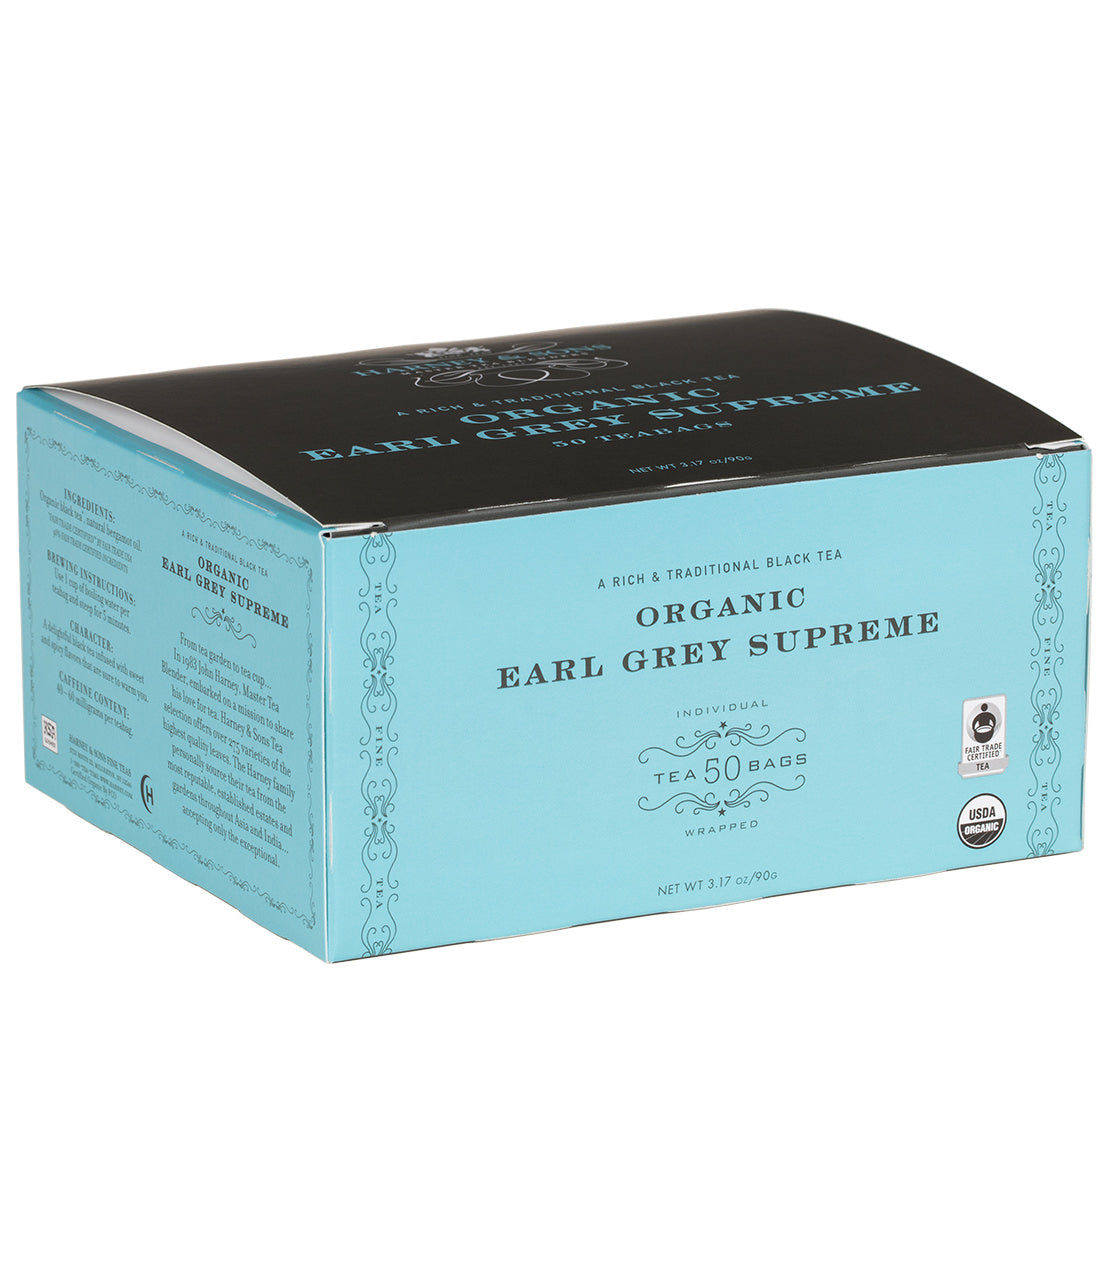 Organic Earl Grey Supreme, Box of 50 Foil Wrapped Teabags - Teabags Box of 50 Foil Wrapped Teabags - Harney & Sons Fine Teas